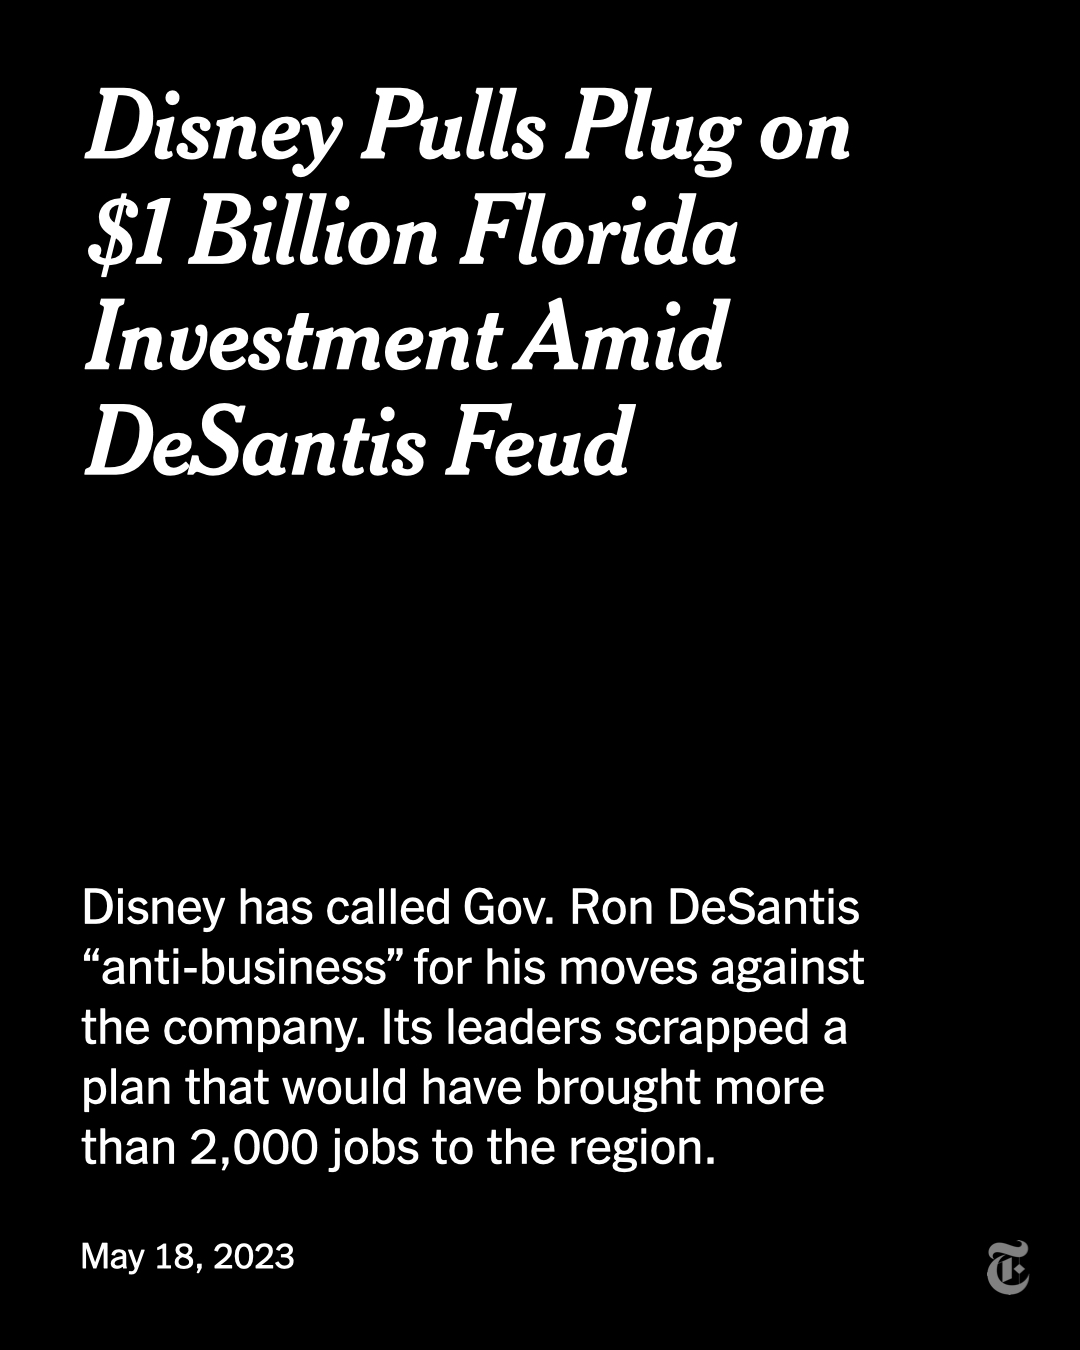 Disney Pulls Plug on $1 Billion Development in Florida